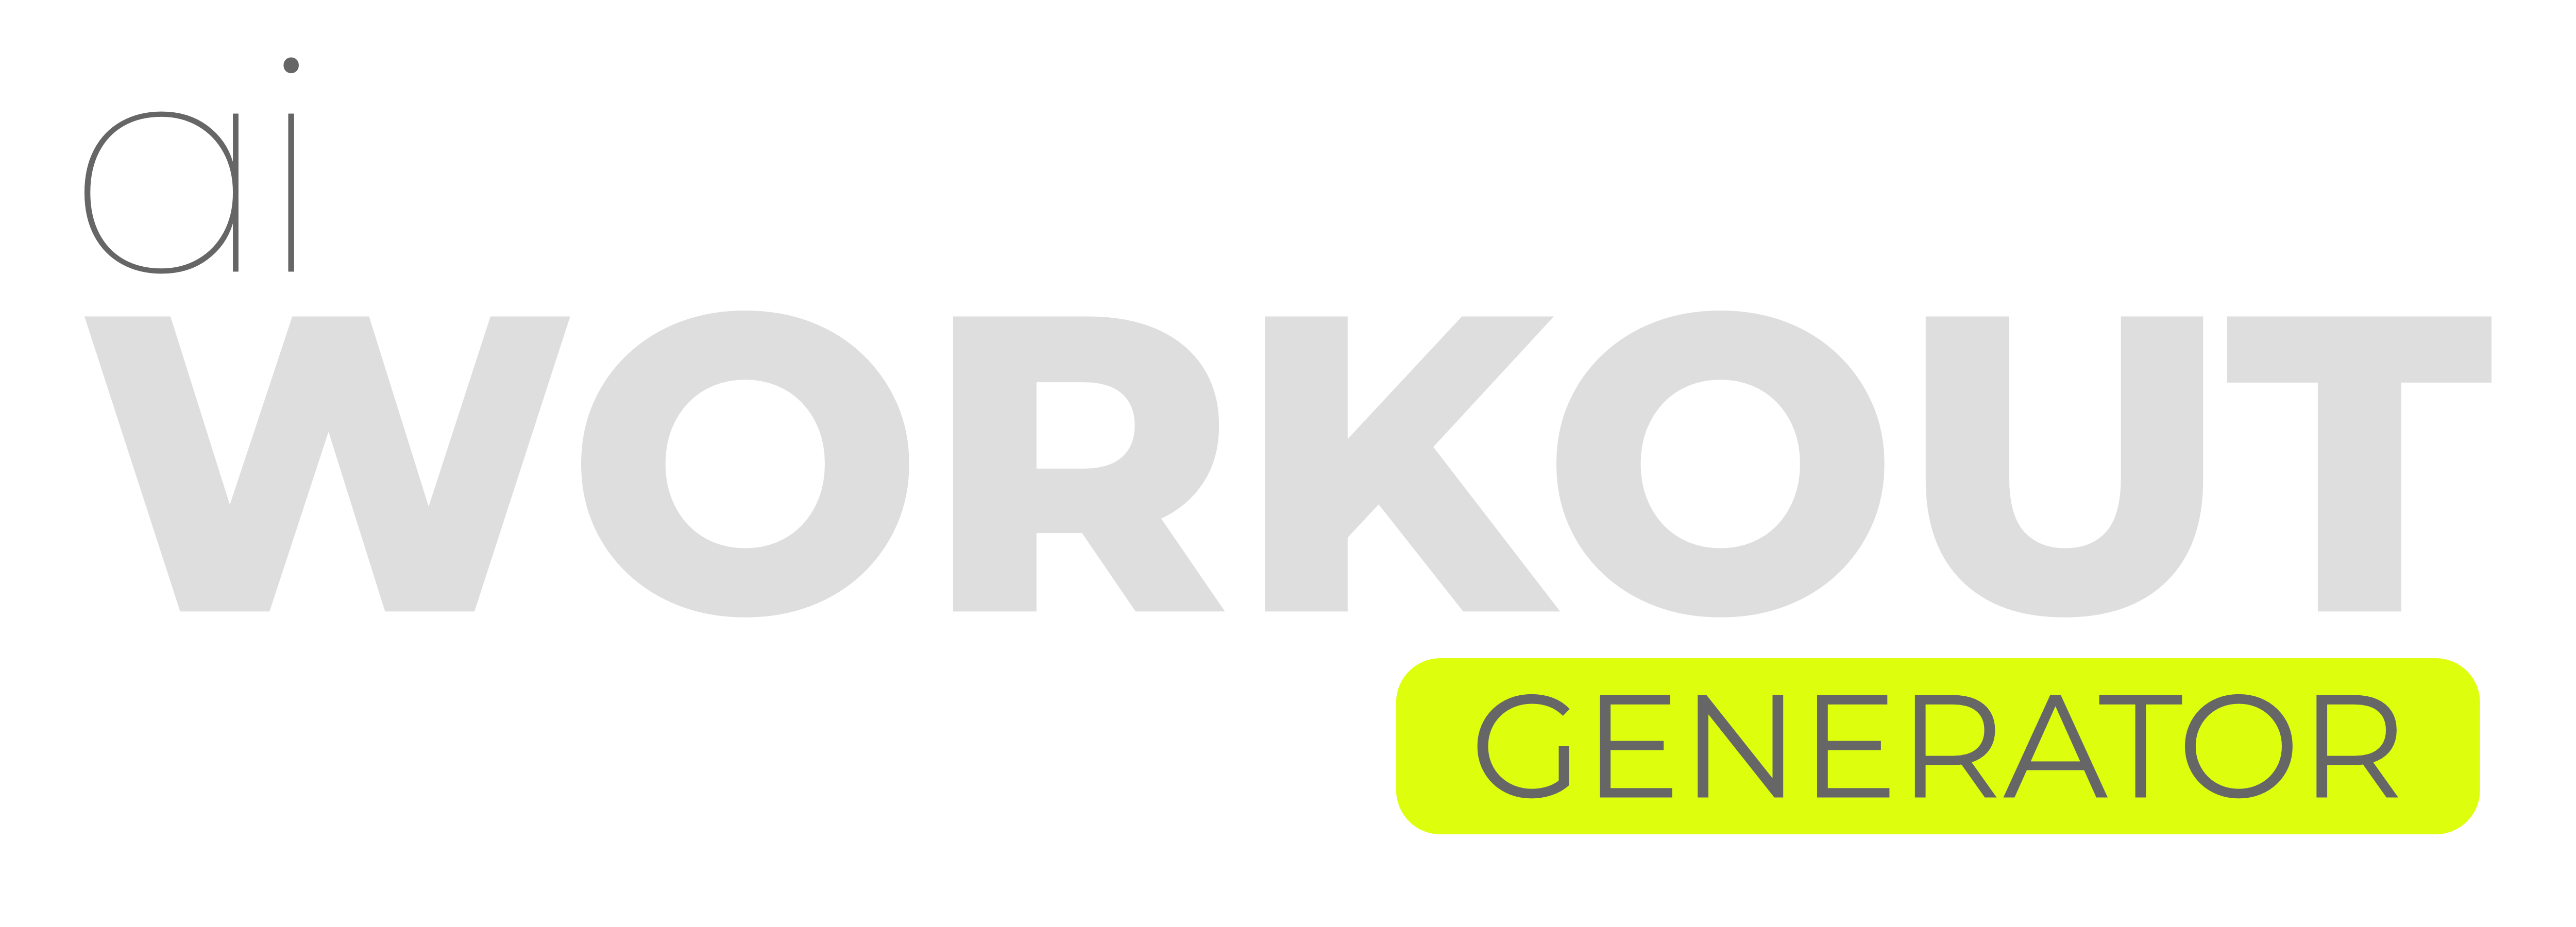 AI Workout Generator Logo